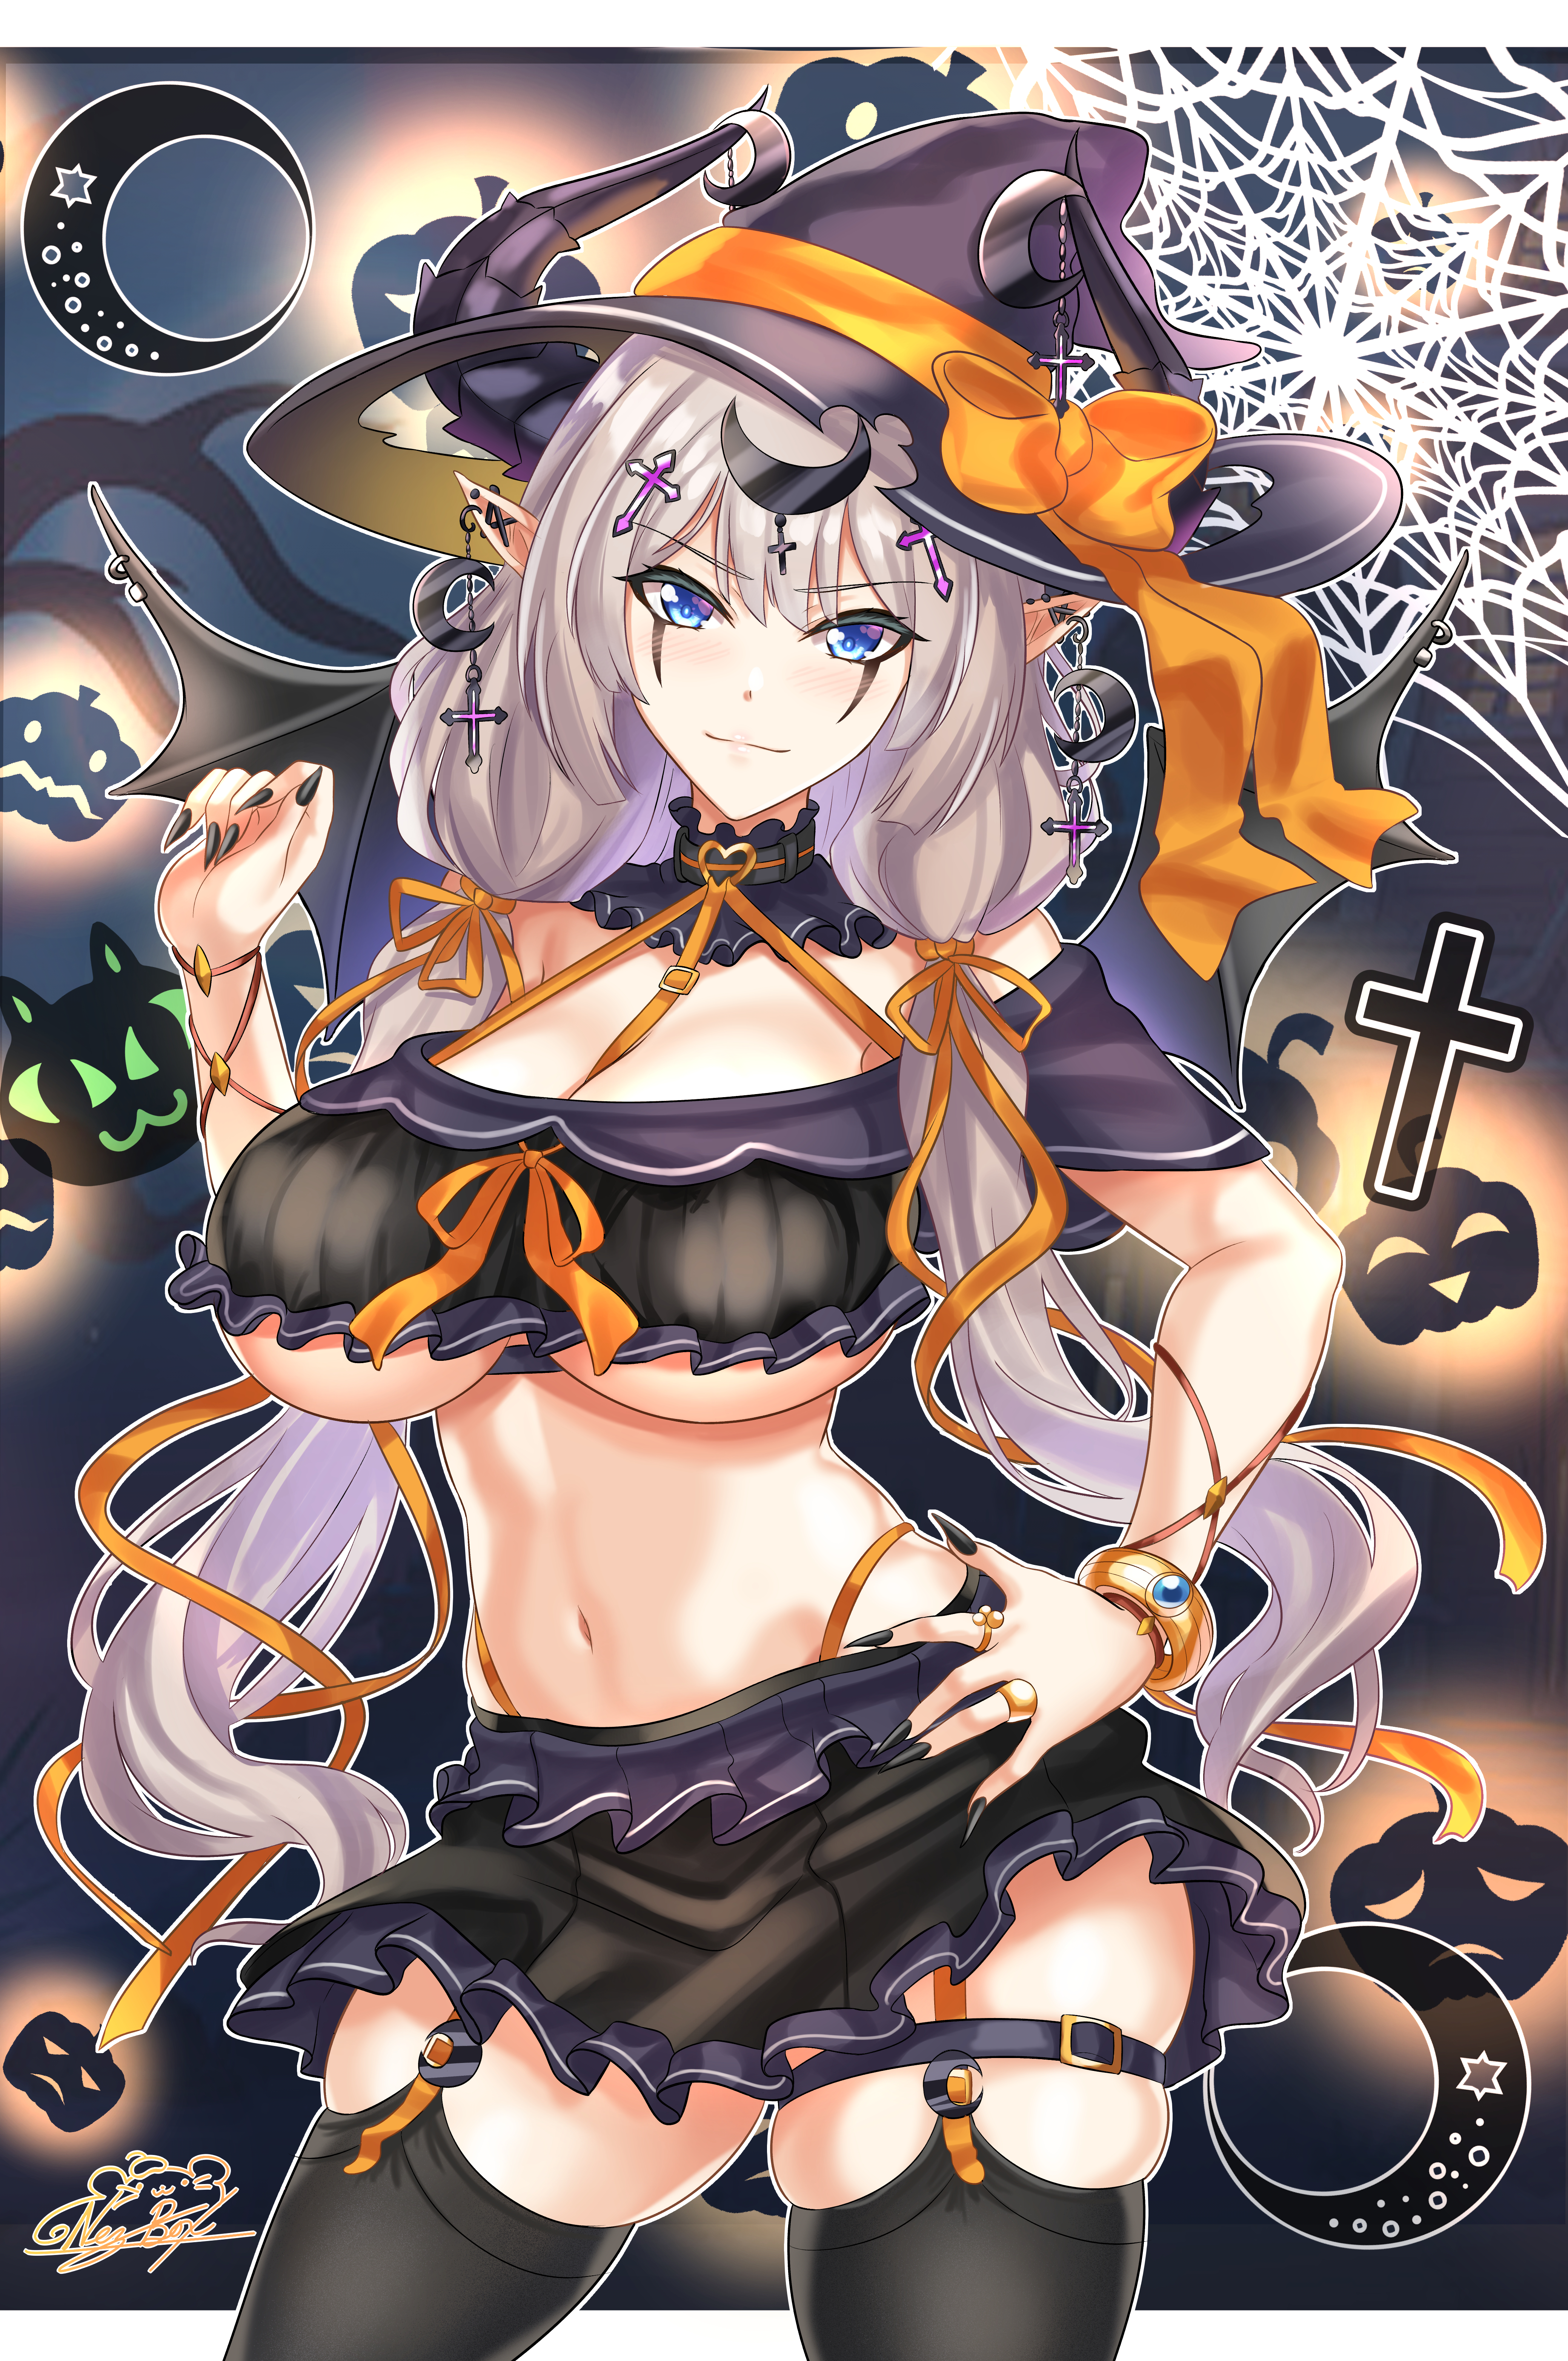 Anime 4156x6258 Nez-Box cleavage anime anime girls halloween costume Halloween witch hat horns pointy ears garter belt